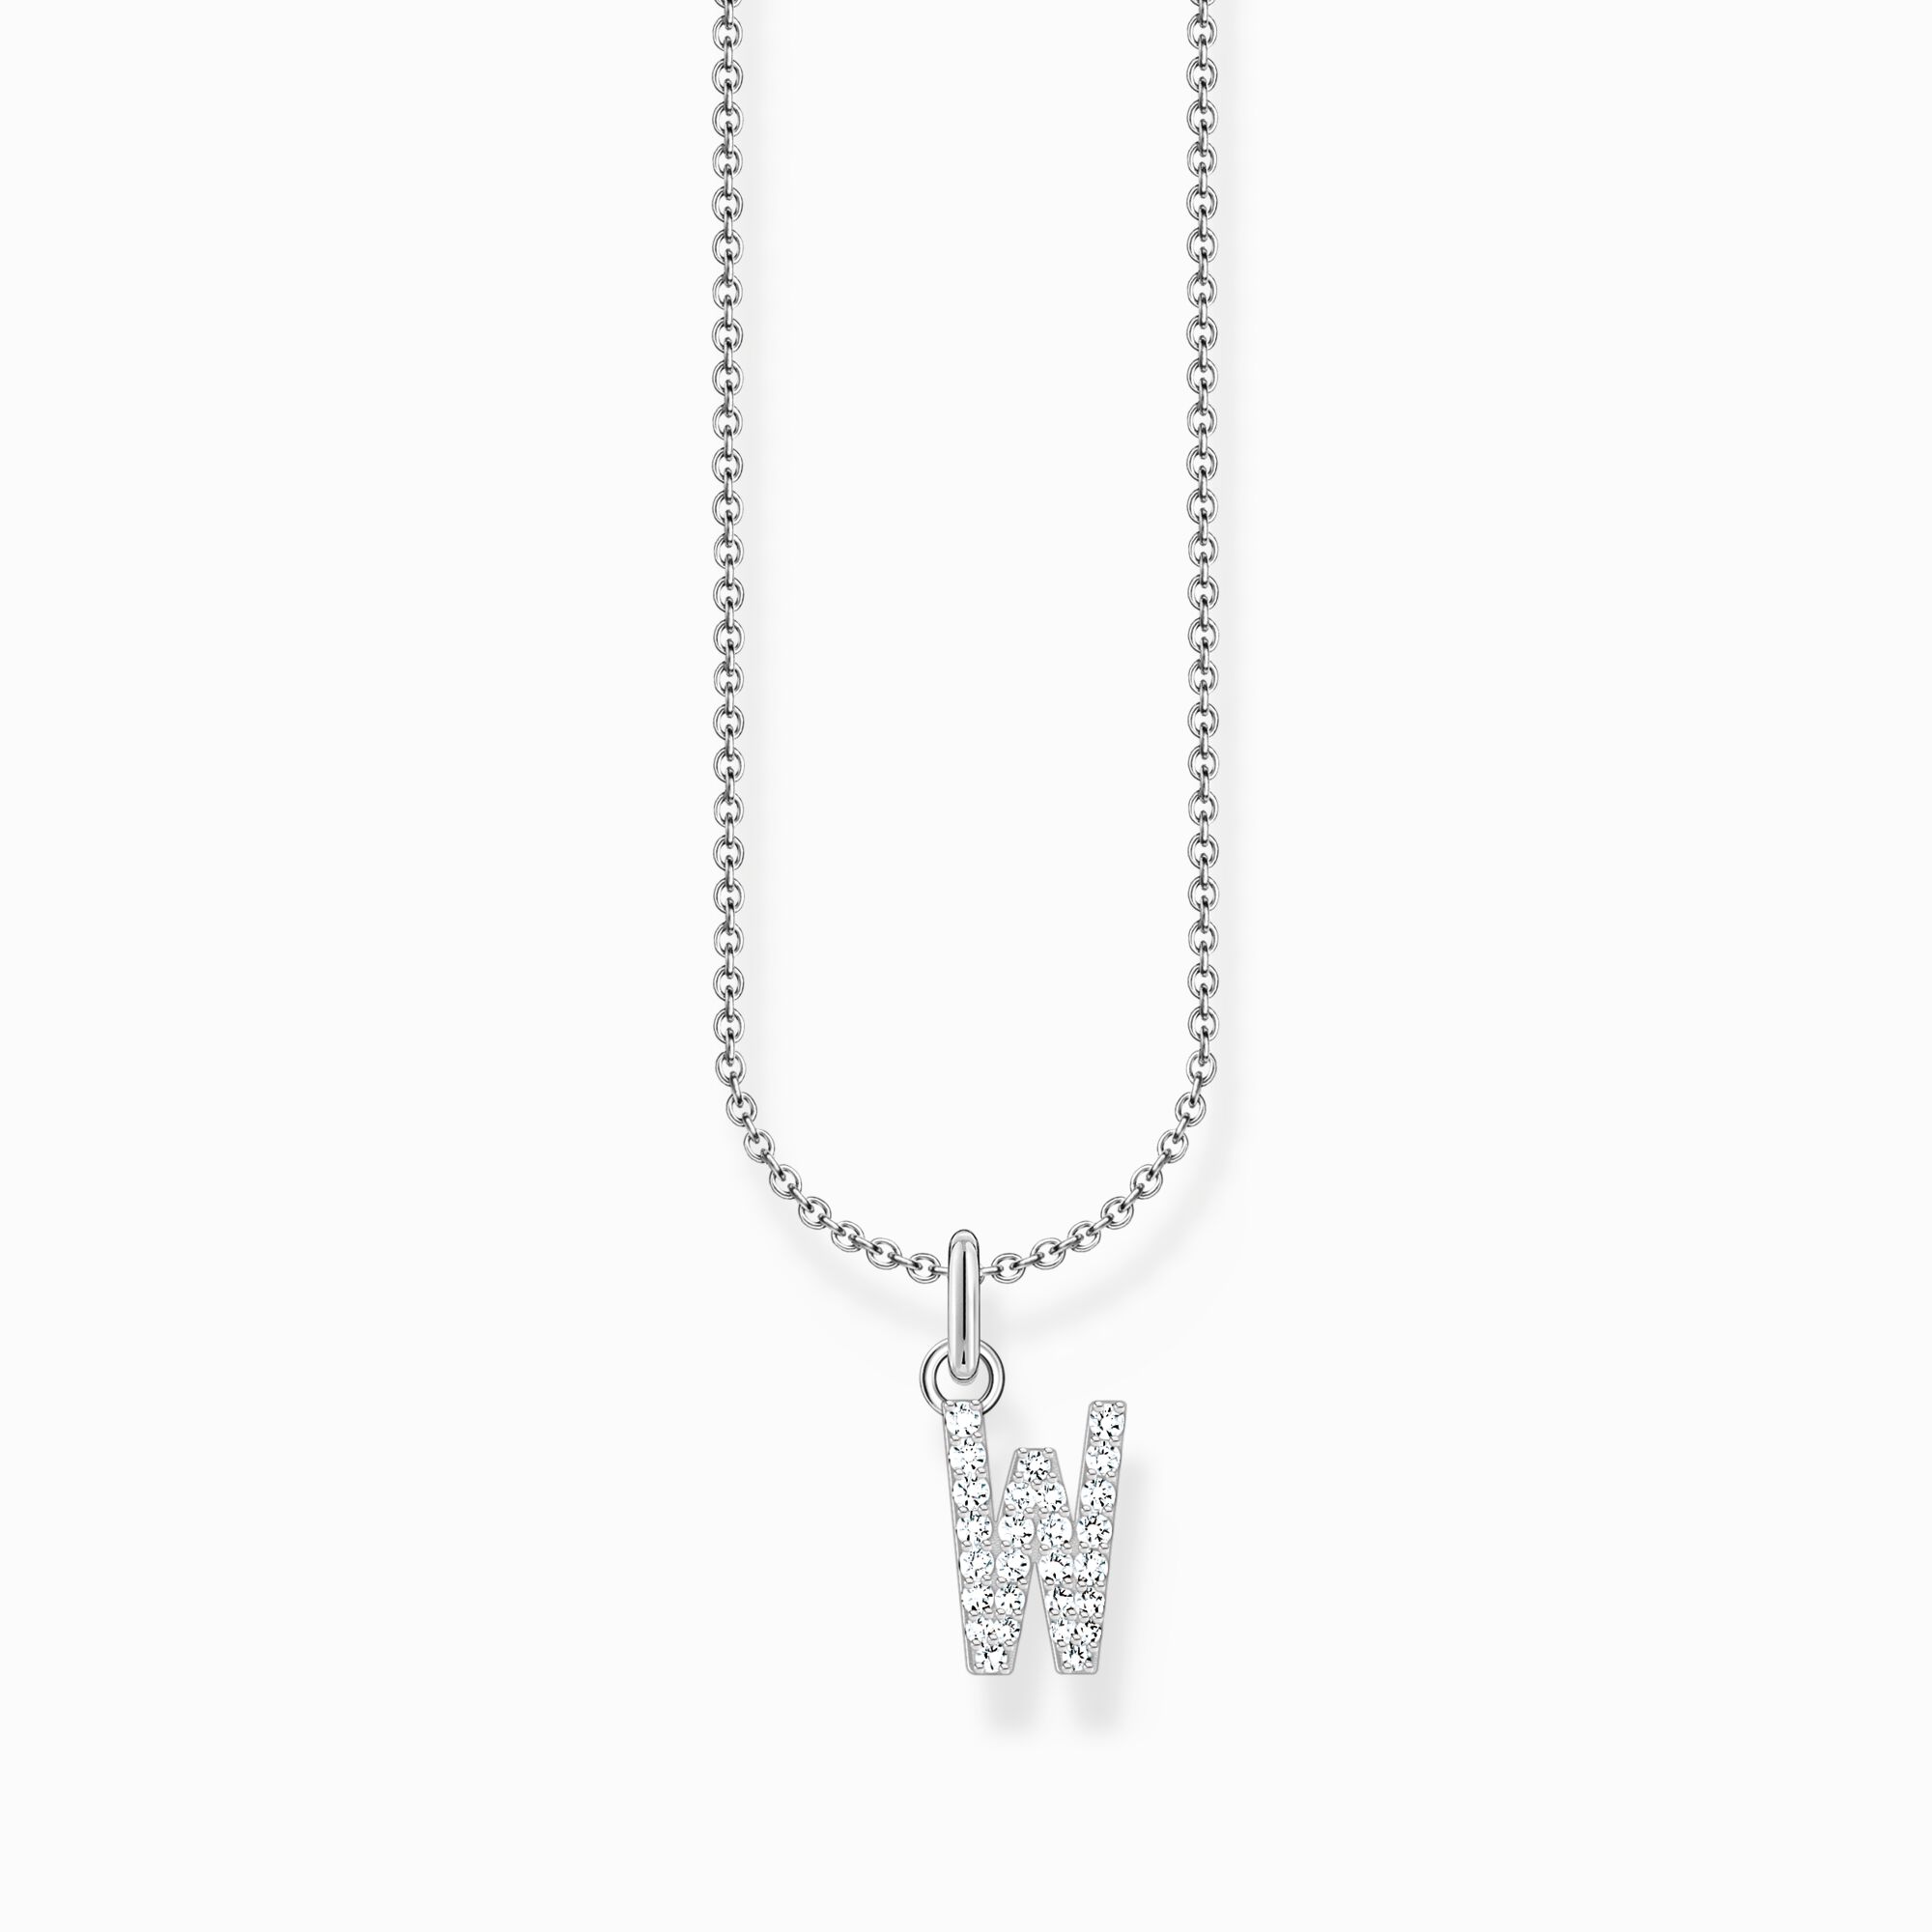 Halsband med bokstaven W, silver ur kollektionen Charming Collection i THOMAS SABO:s onlineshop